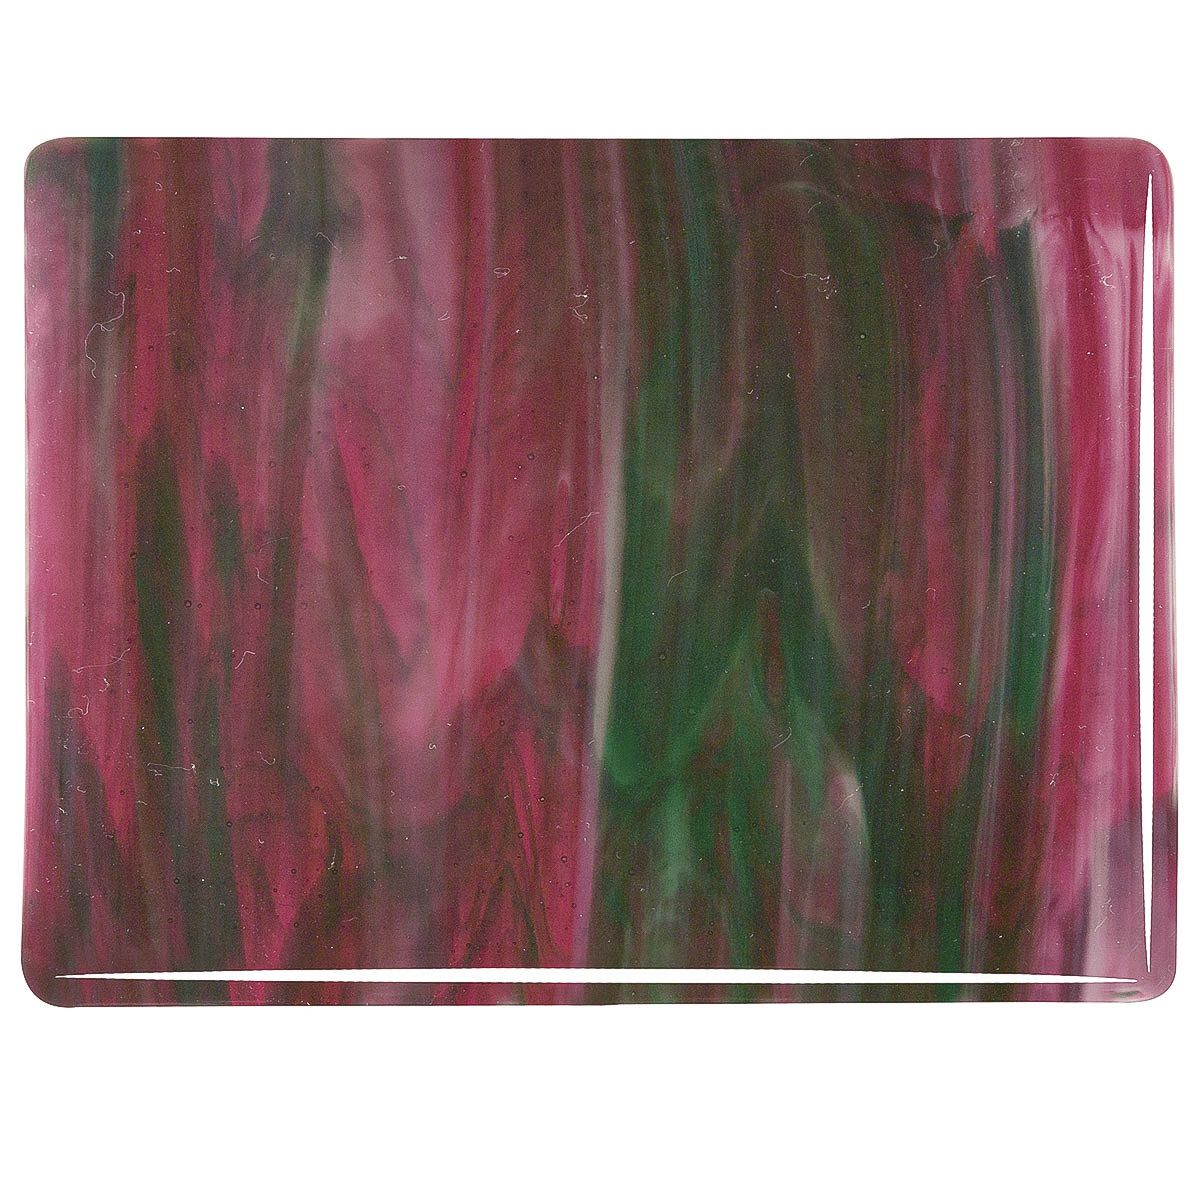 Cranberry Pink Transparent, Emerald Green Transparent, White Opalescent 3+ Color Mix, 3 mm